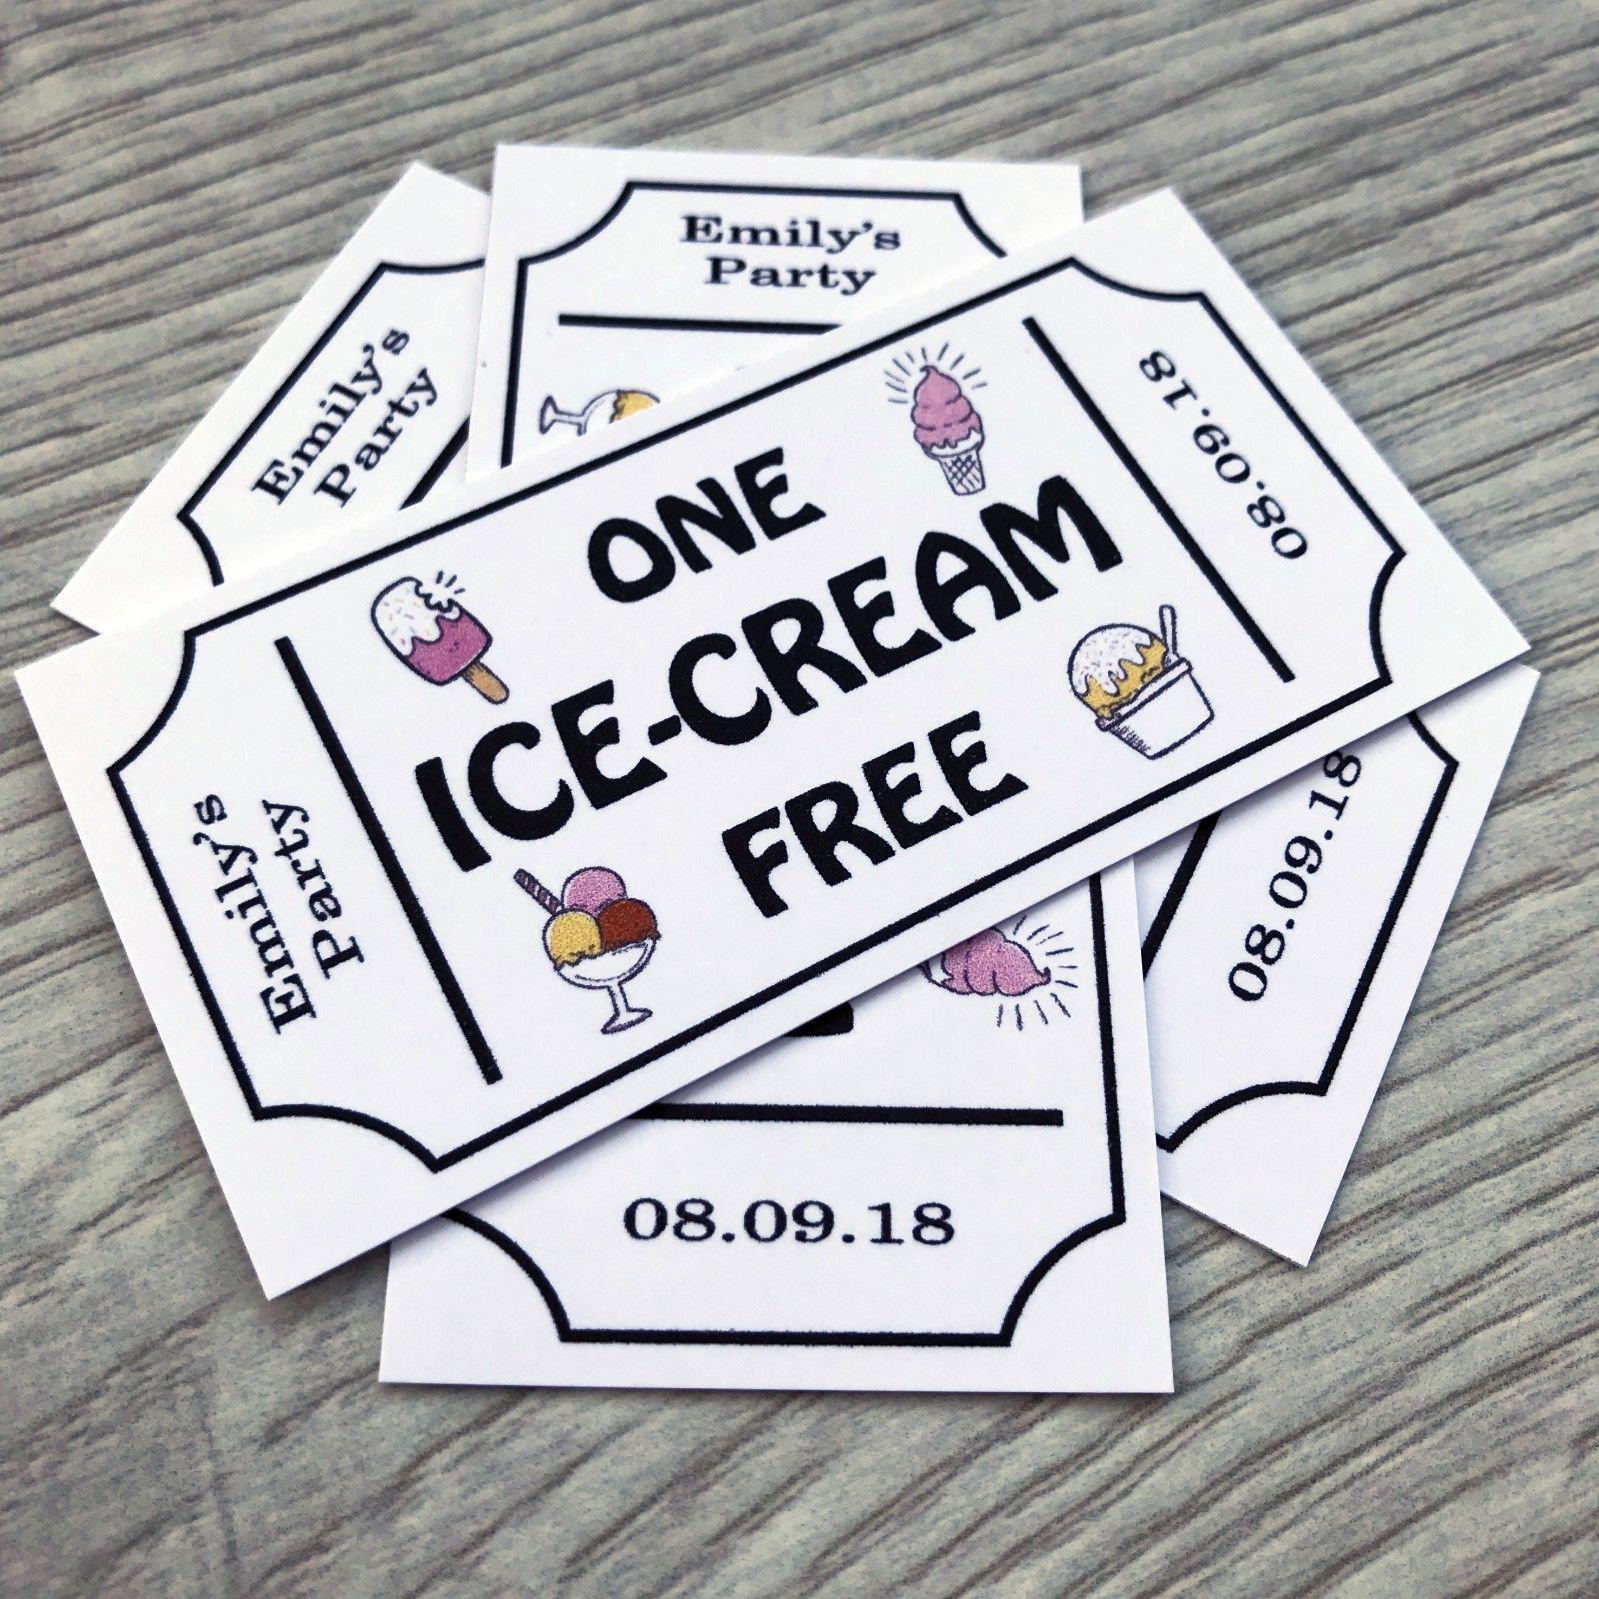 ice-cream-tokens-personalised-wedding-tickets-qty-50-white-etsy-uk